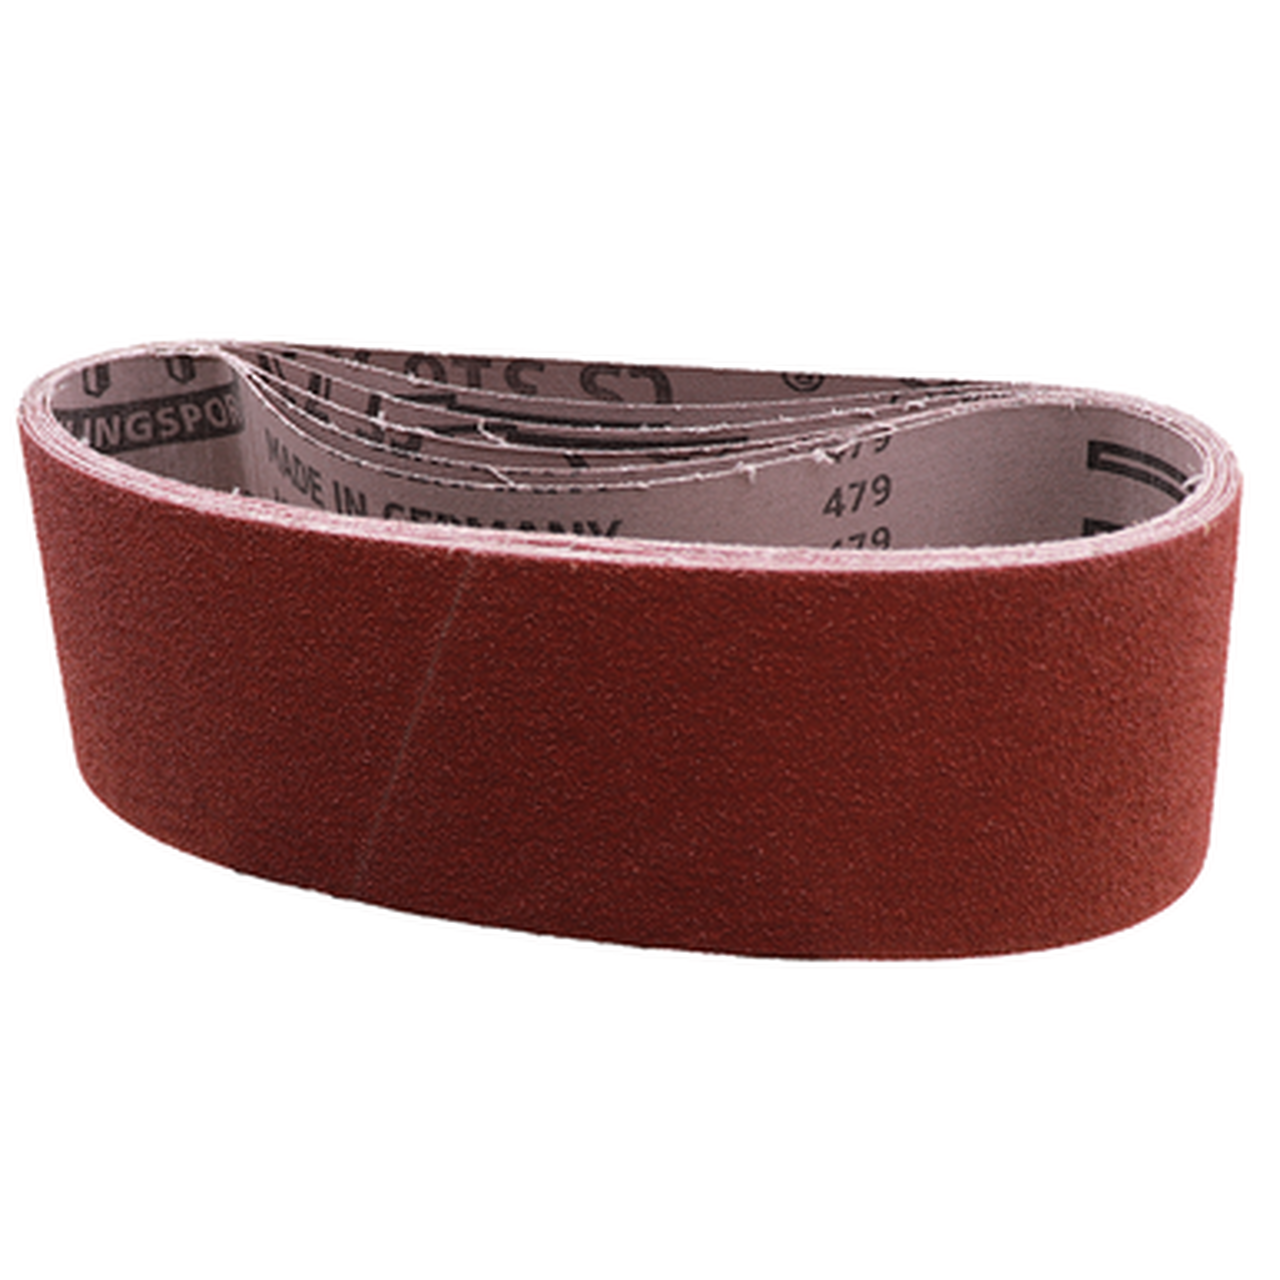 Klingspor Abrasives 3 Inch Bargain Box of Belts